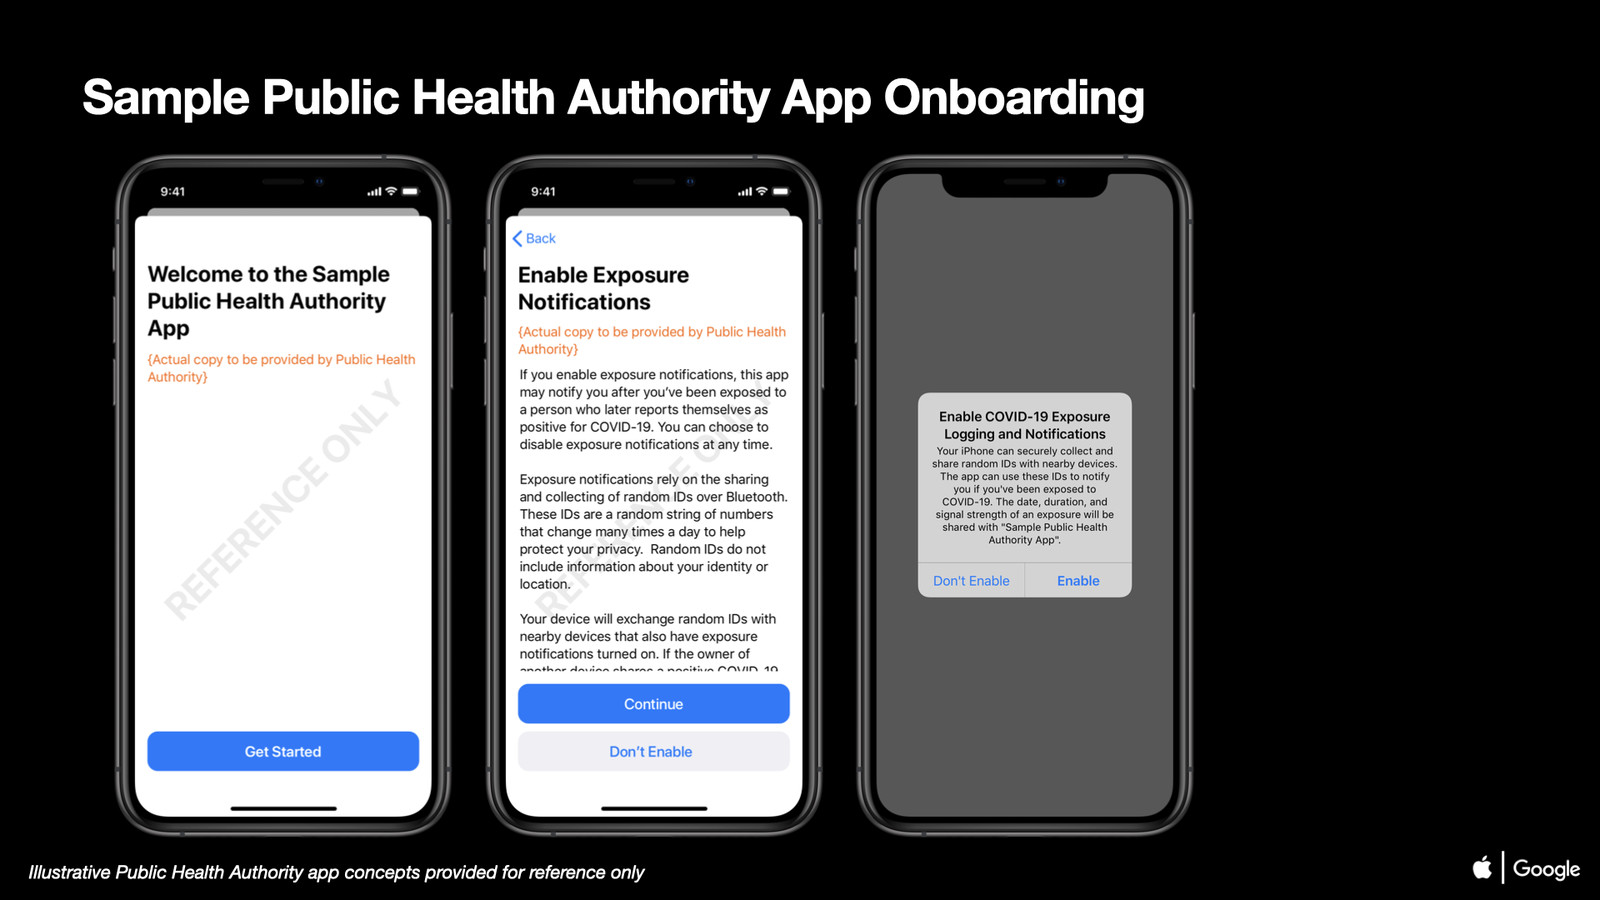 Sample public health authority app onboarding